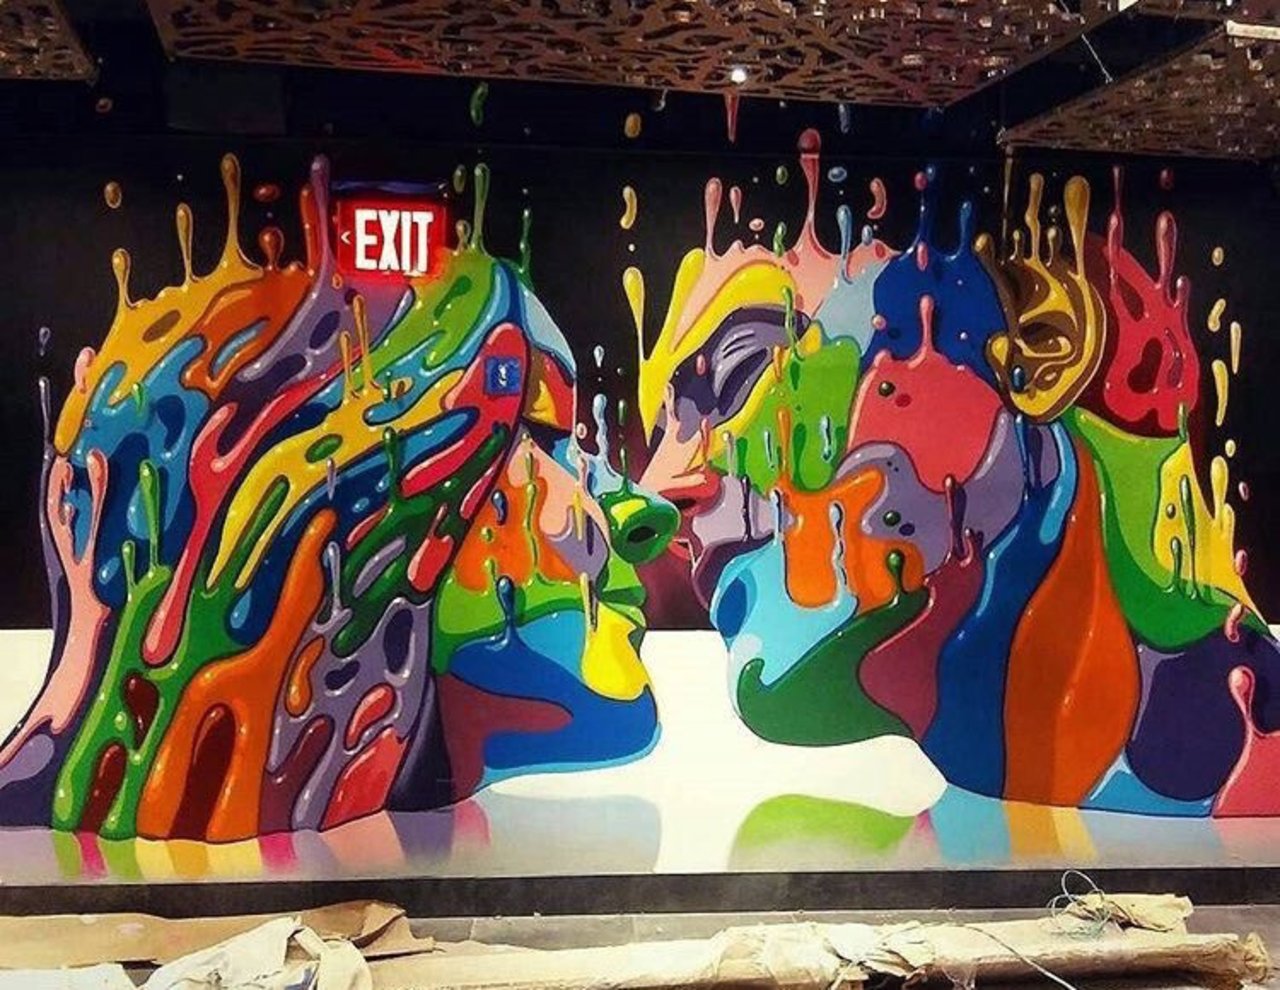 #mural by Dasic Fernandez #NYC #USA #art #graffiti #streetart https://t.co/GxA0LtUer6